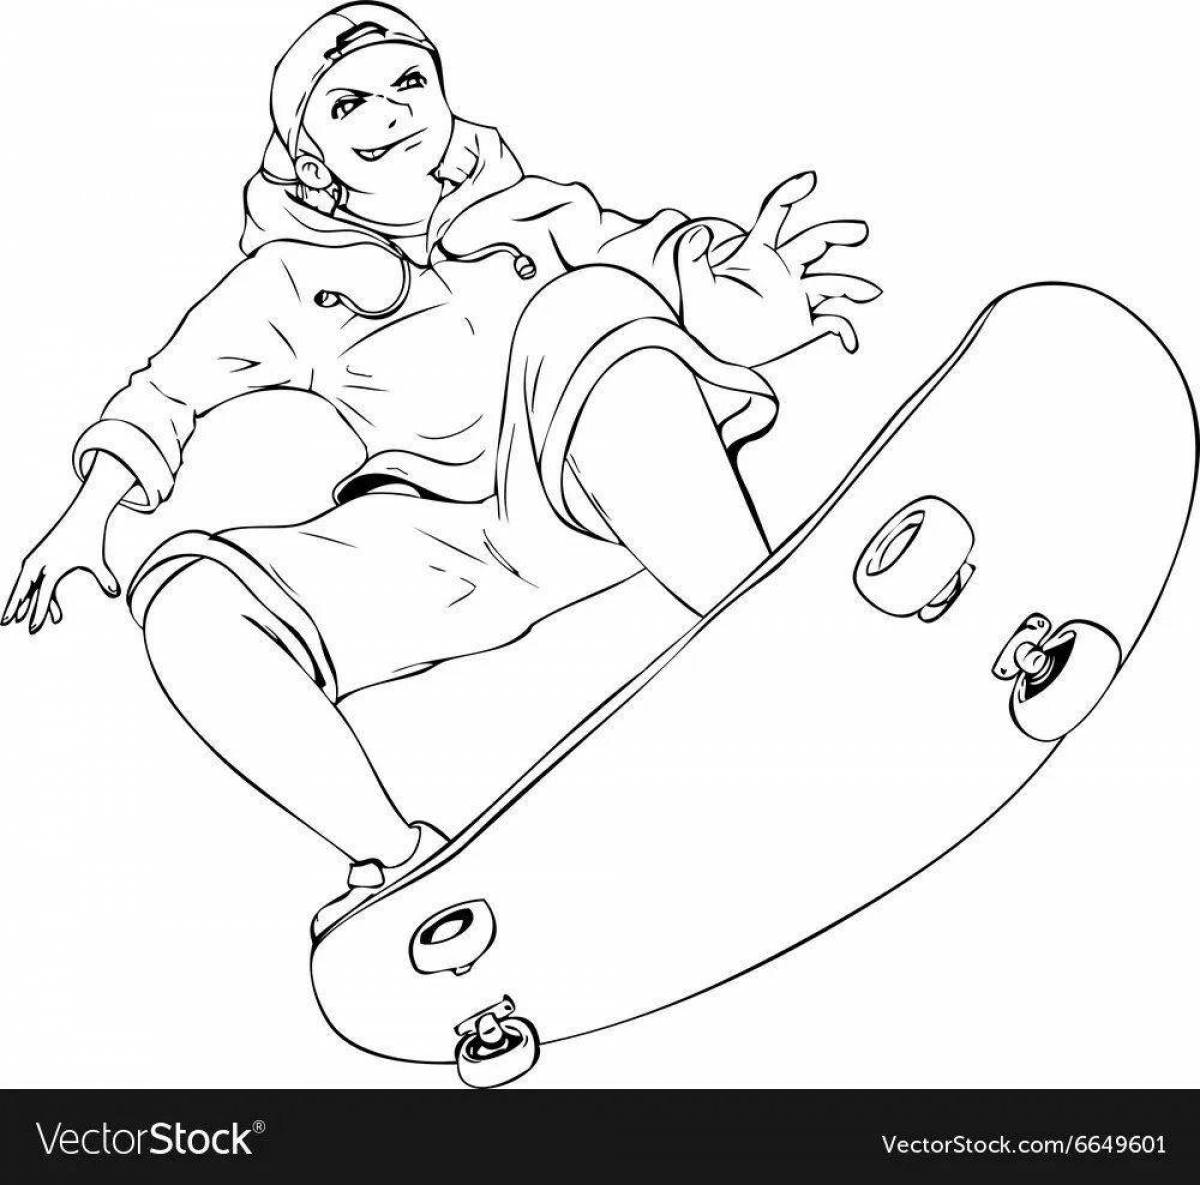 Nimble girl on a skateboard